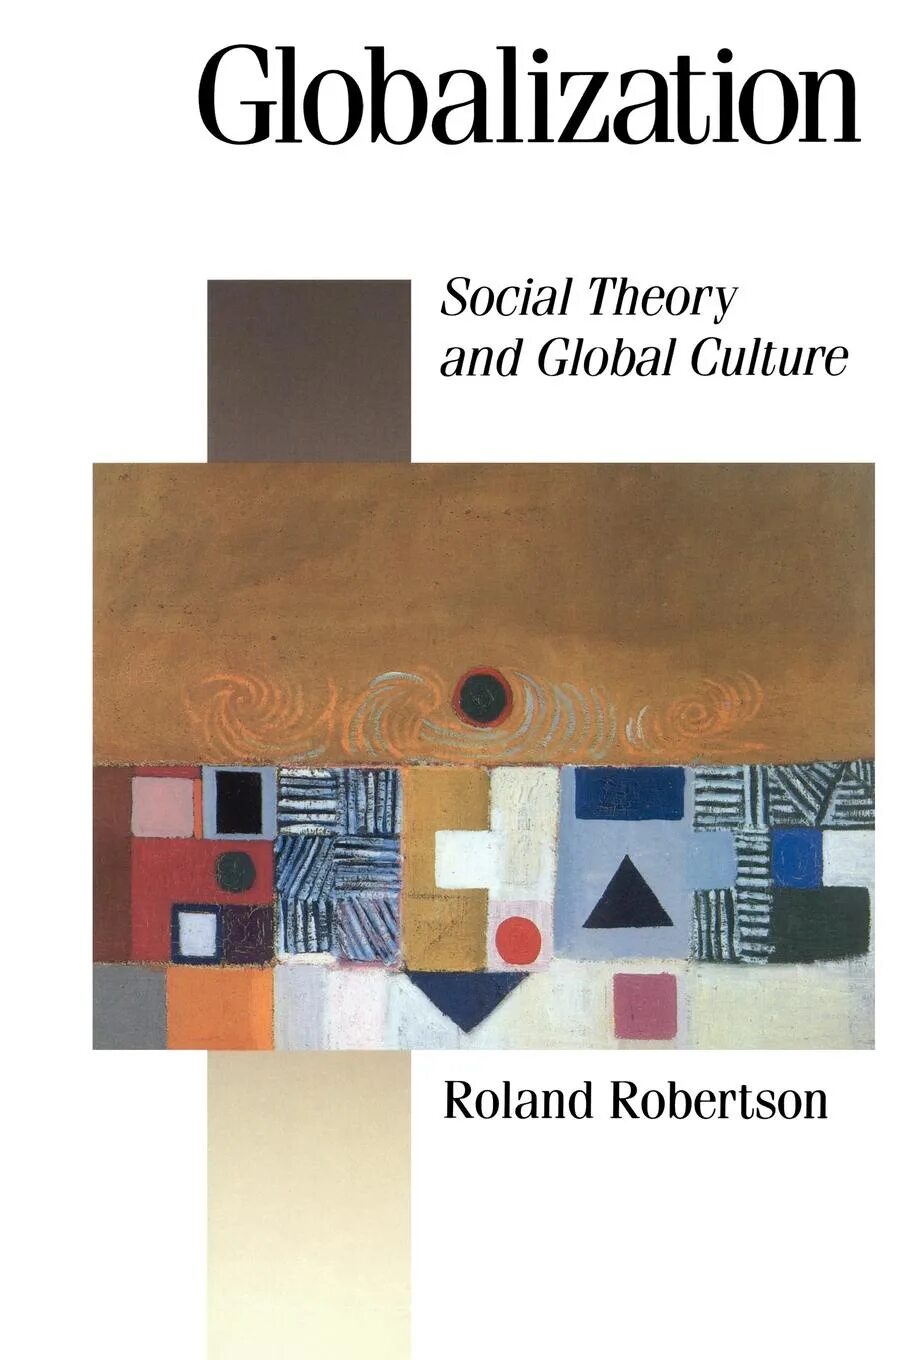 Роланд Робертсон. Робертсон глобализация. Рональд Робертсон глобализация. Р Робертсон социолог.